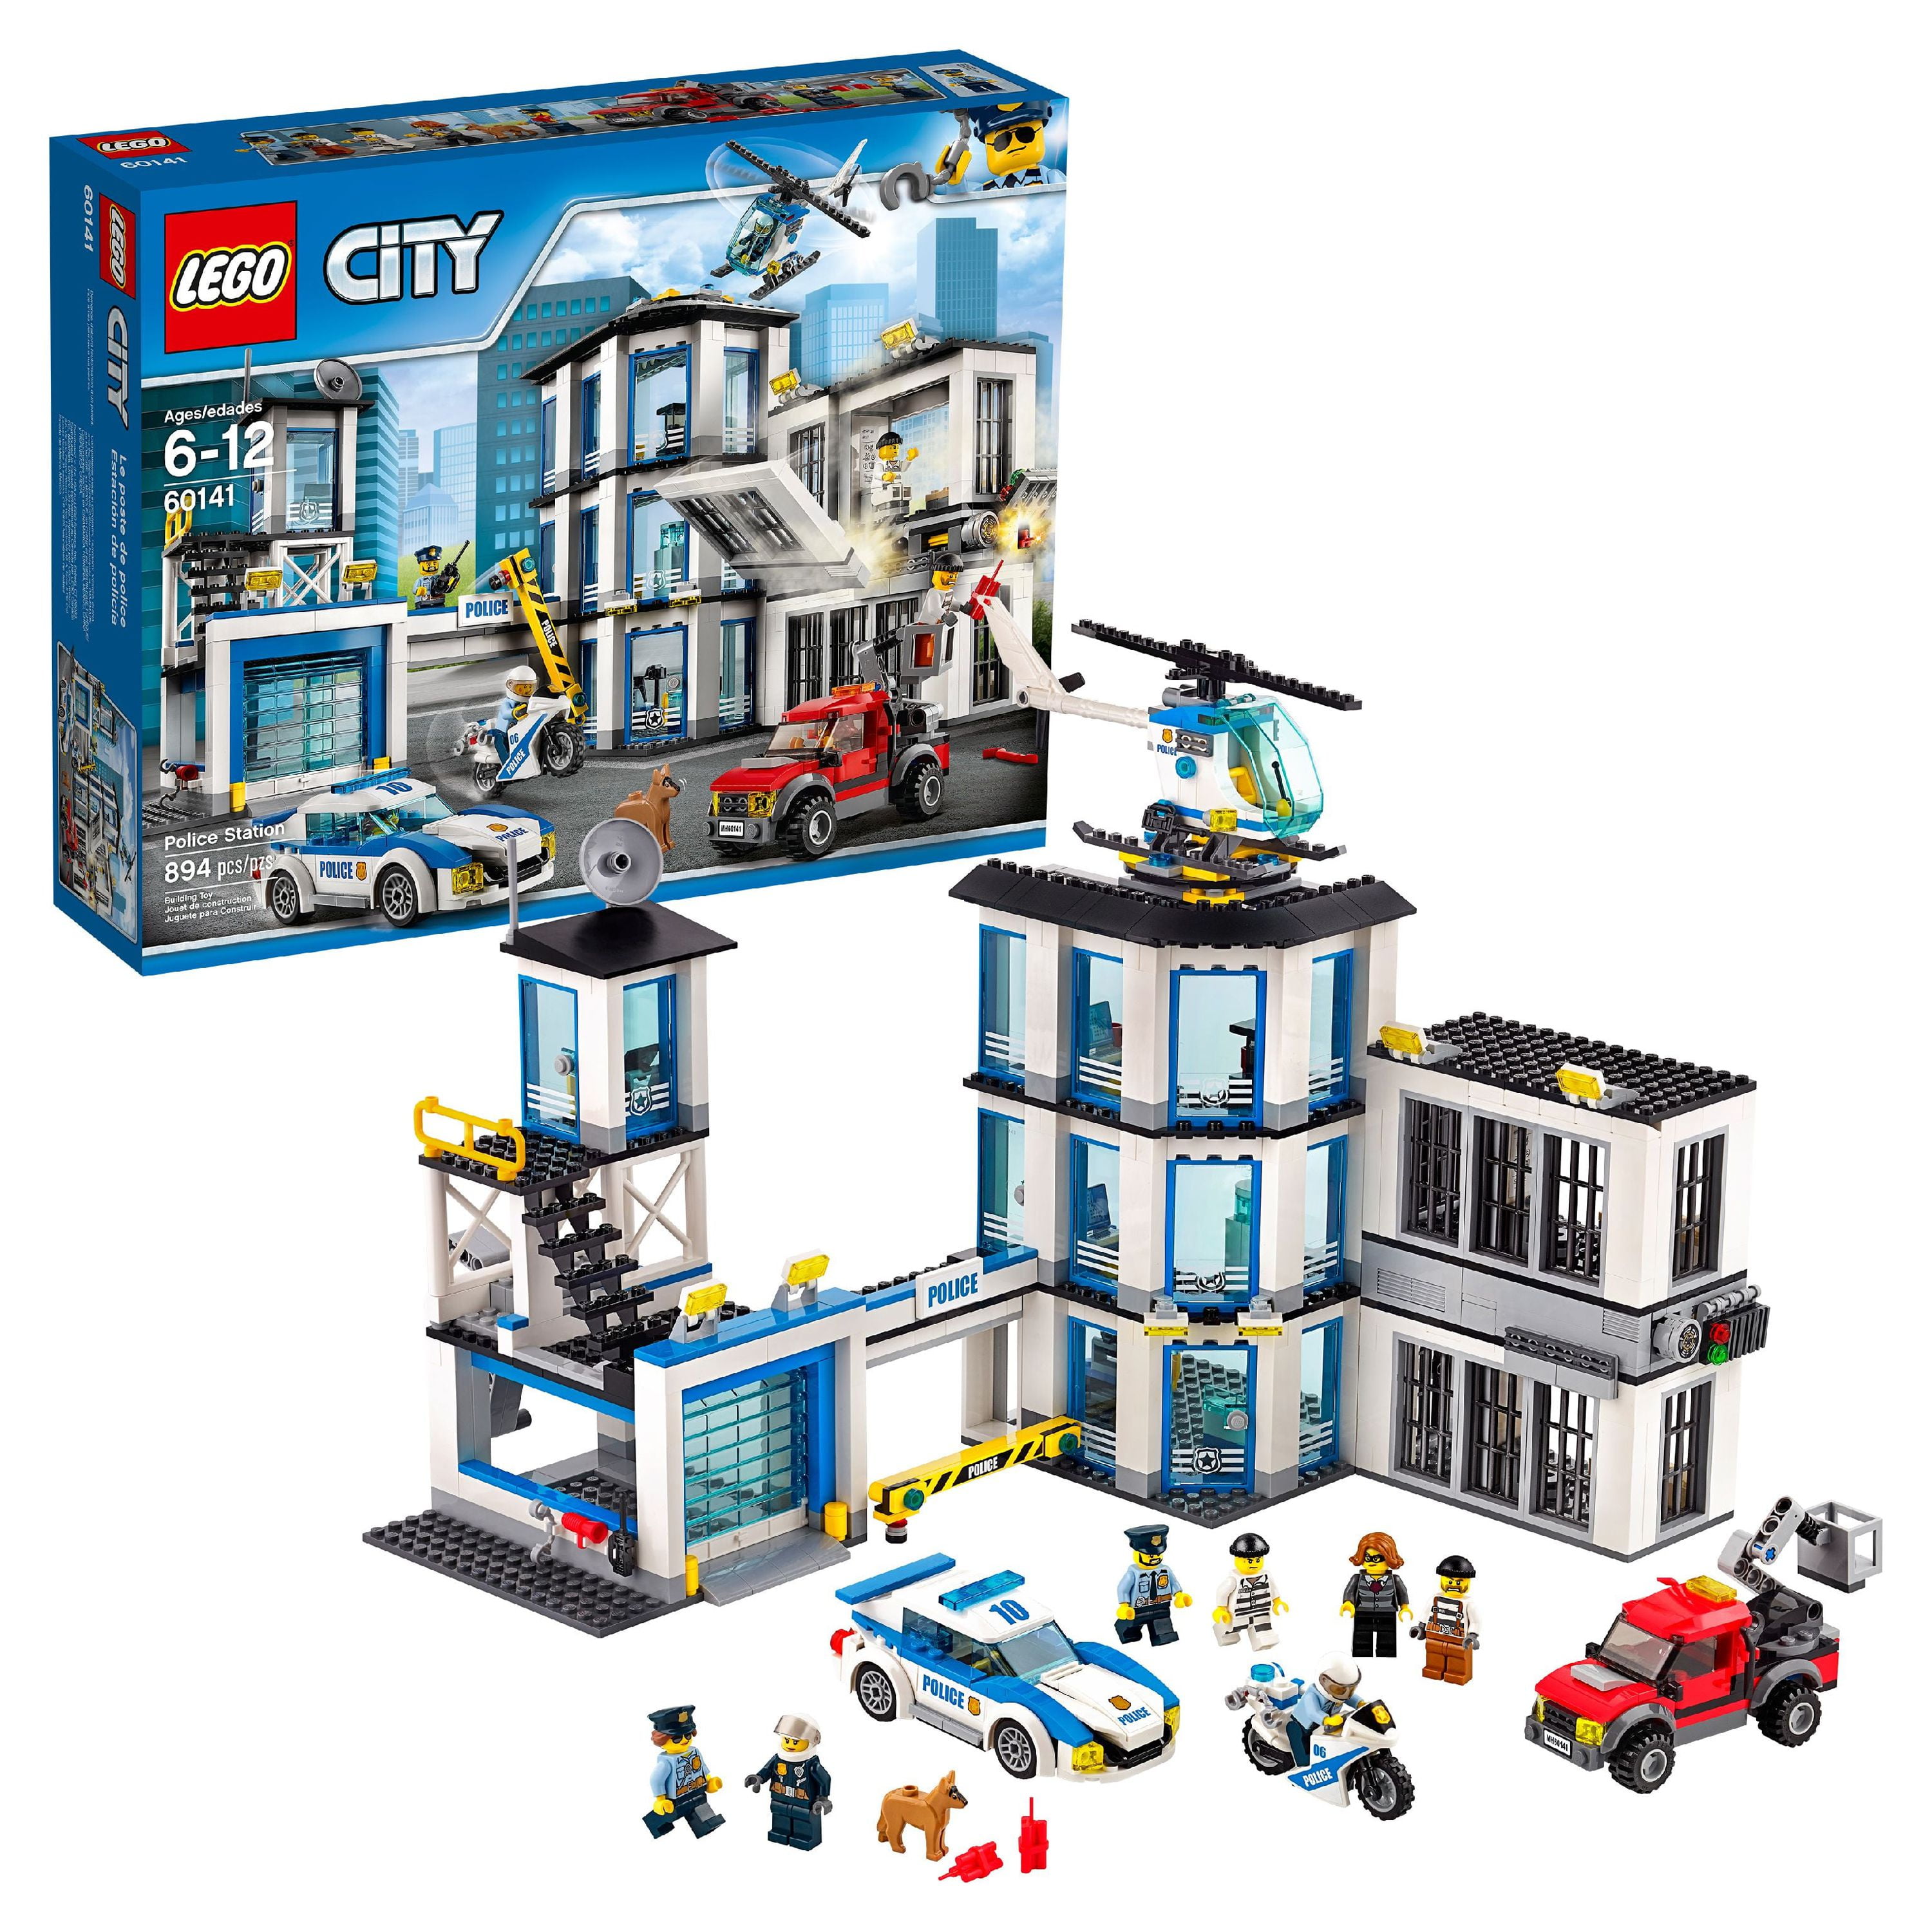 LEGO City Police Station 60141 Building Set (894 Pieces)